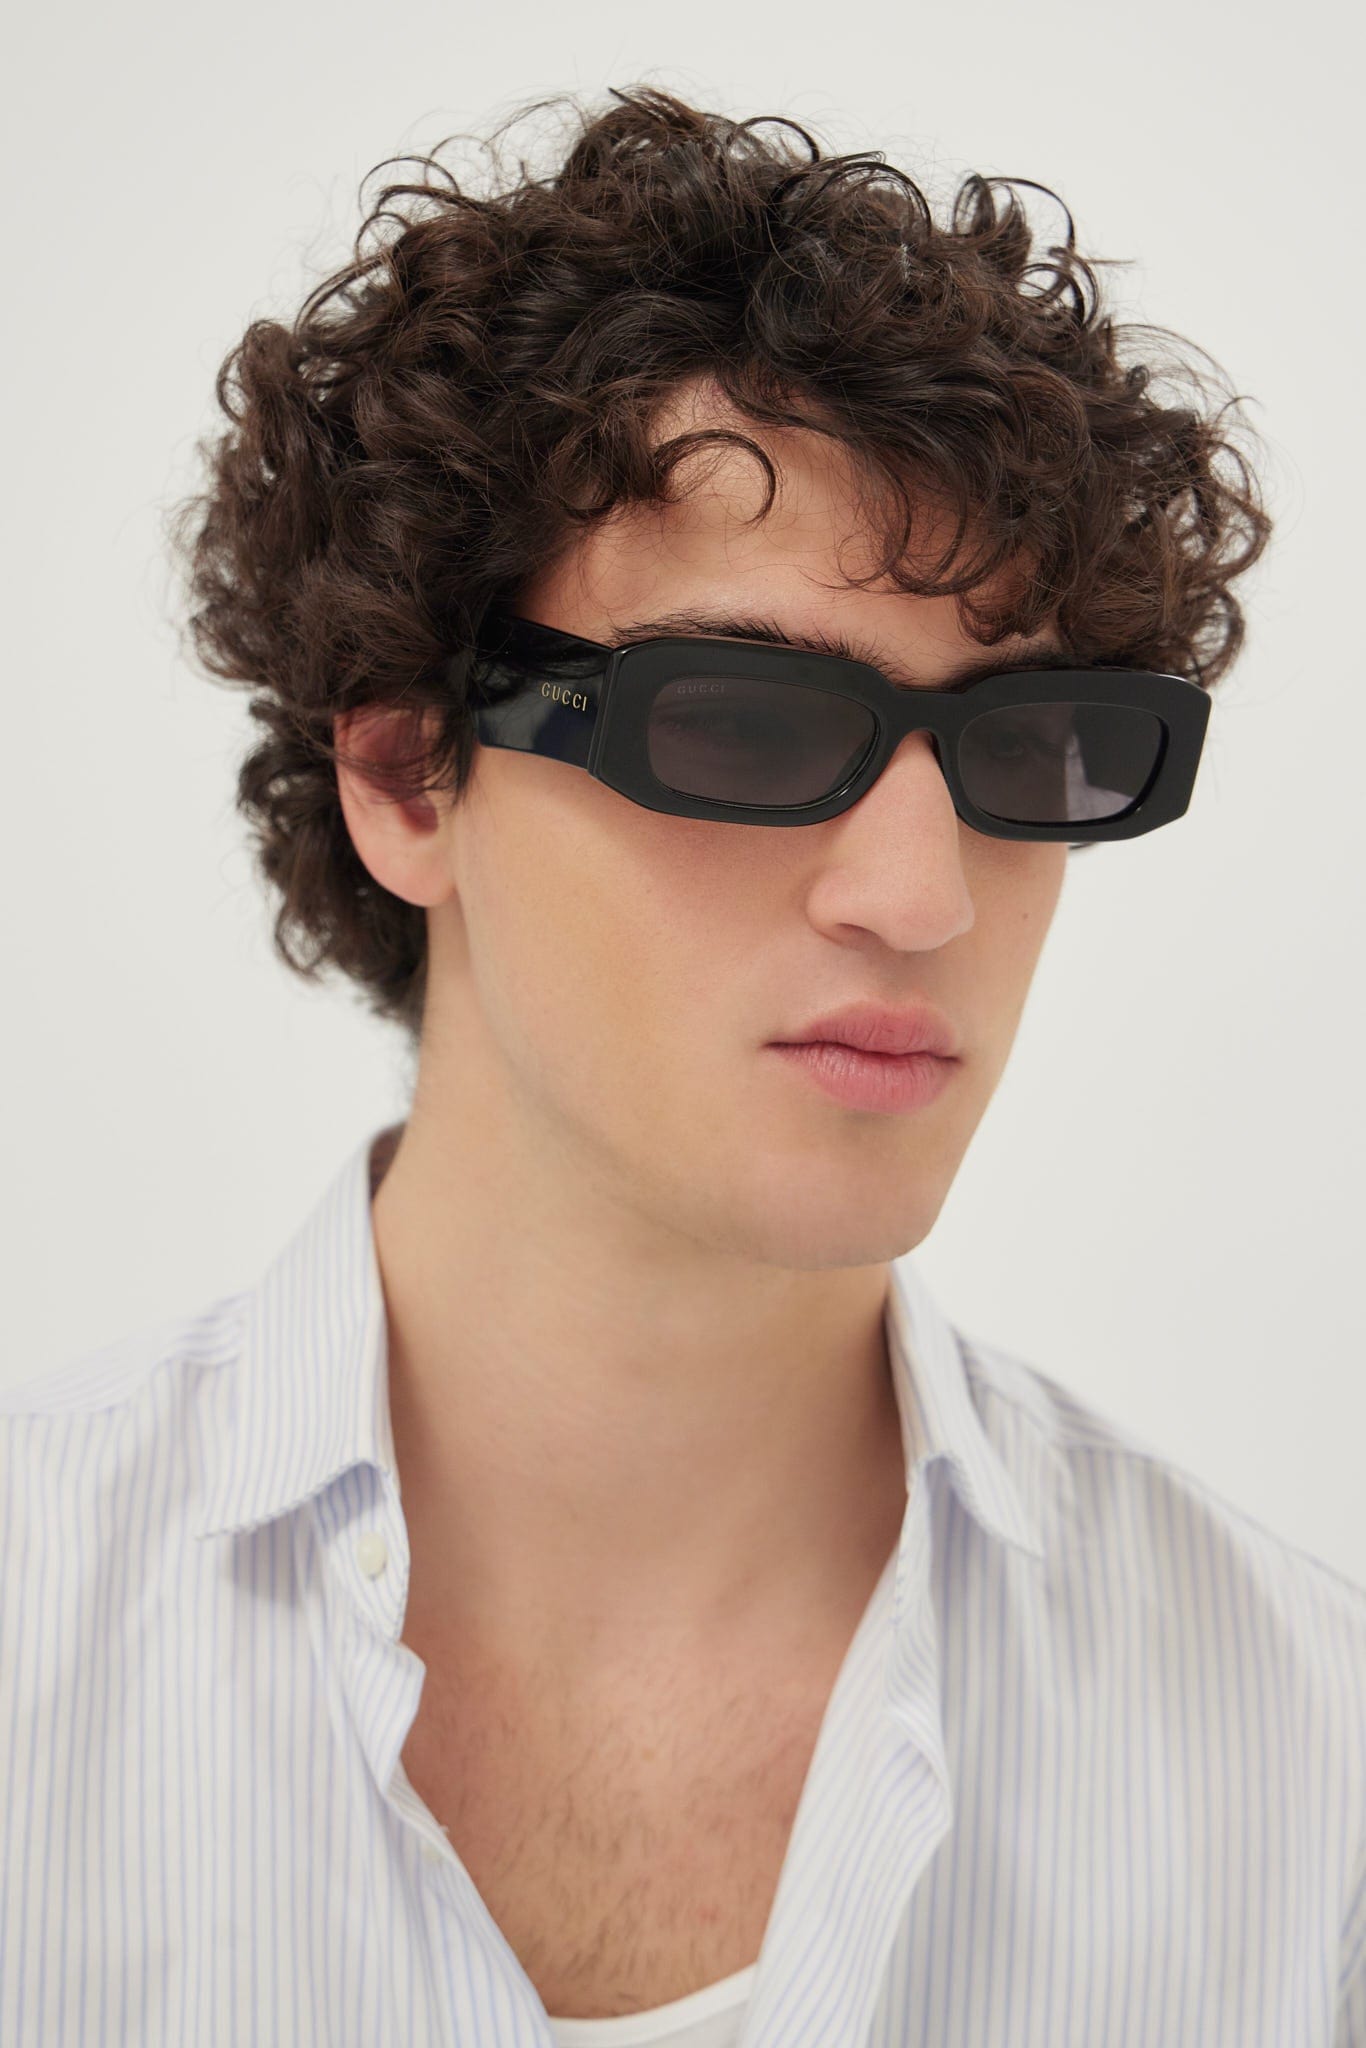 Gucci chuncky black sunglasses - Eyewear Club